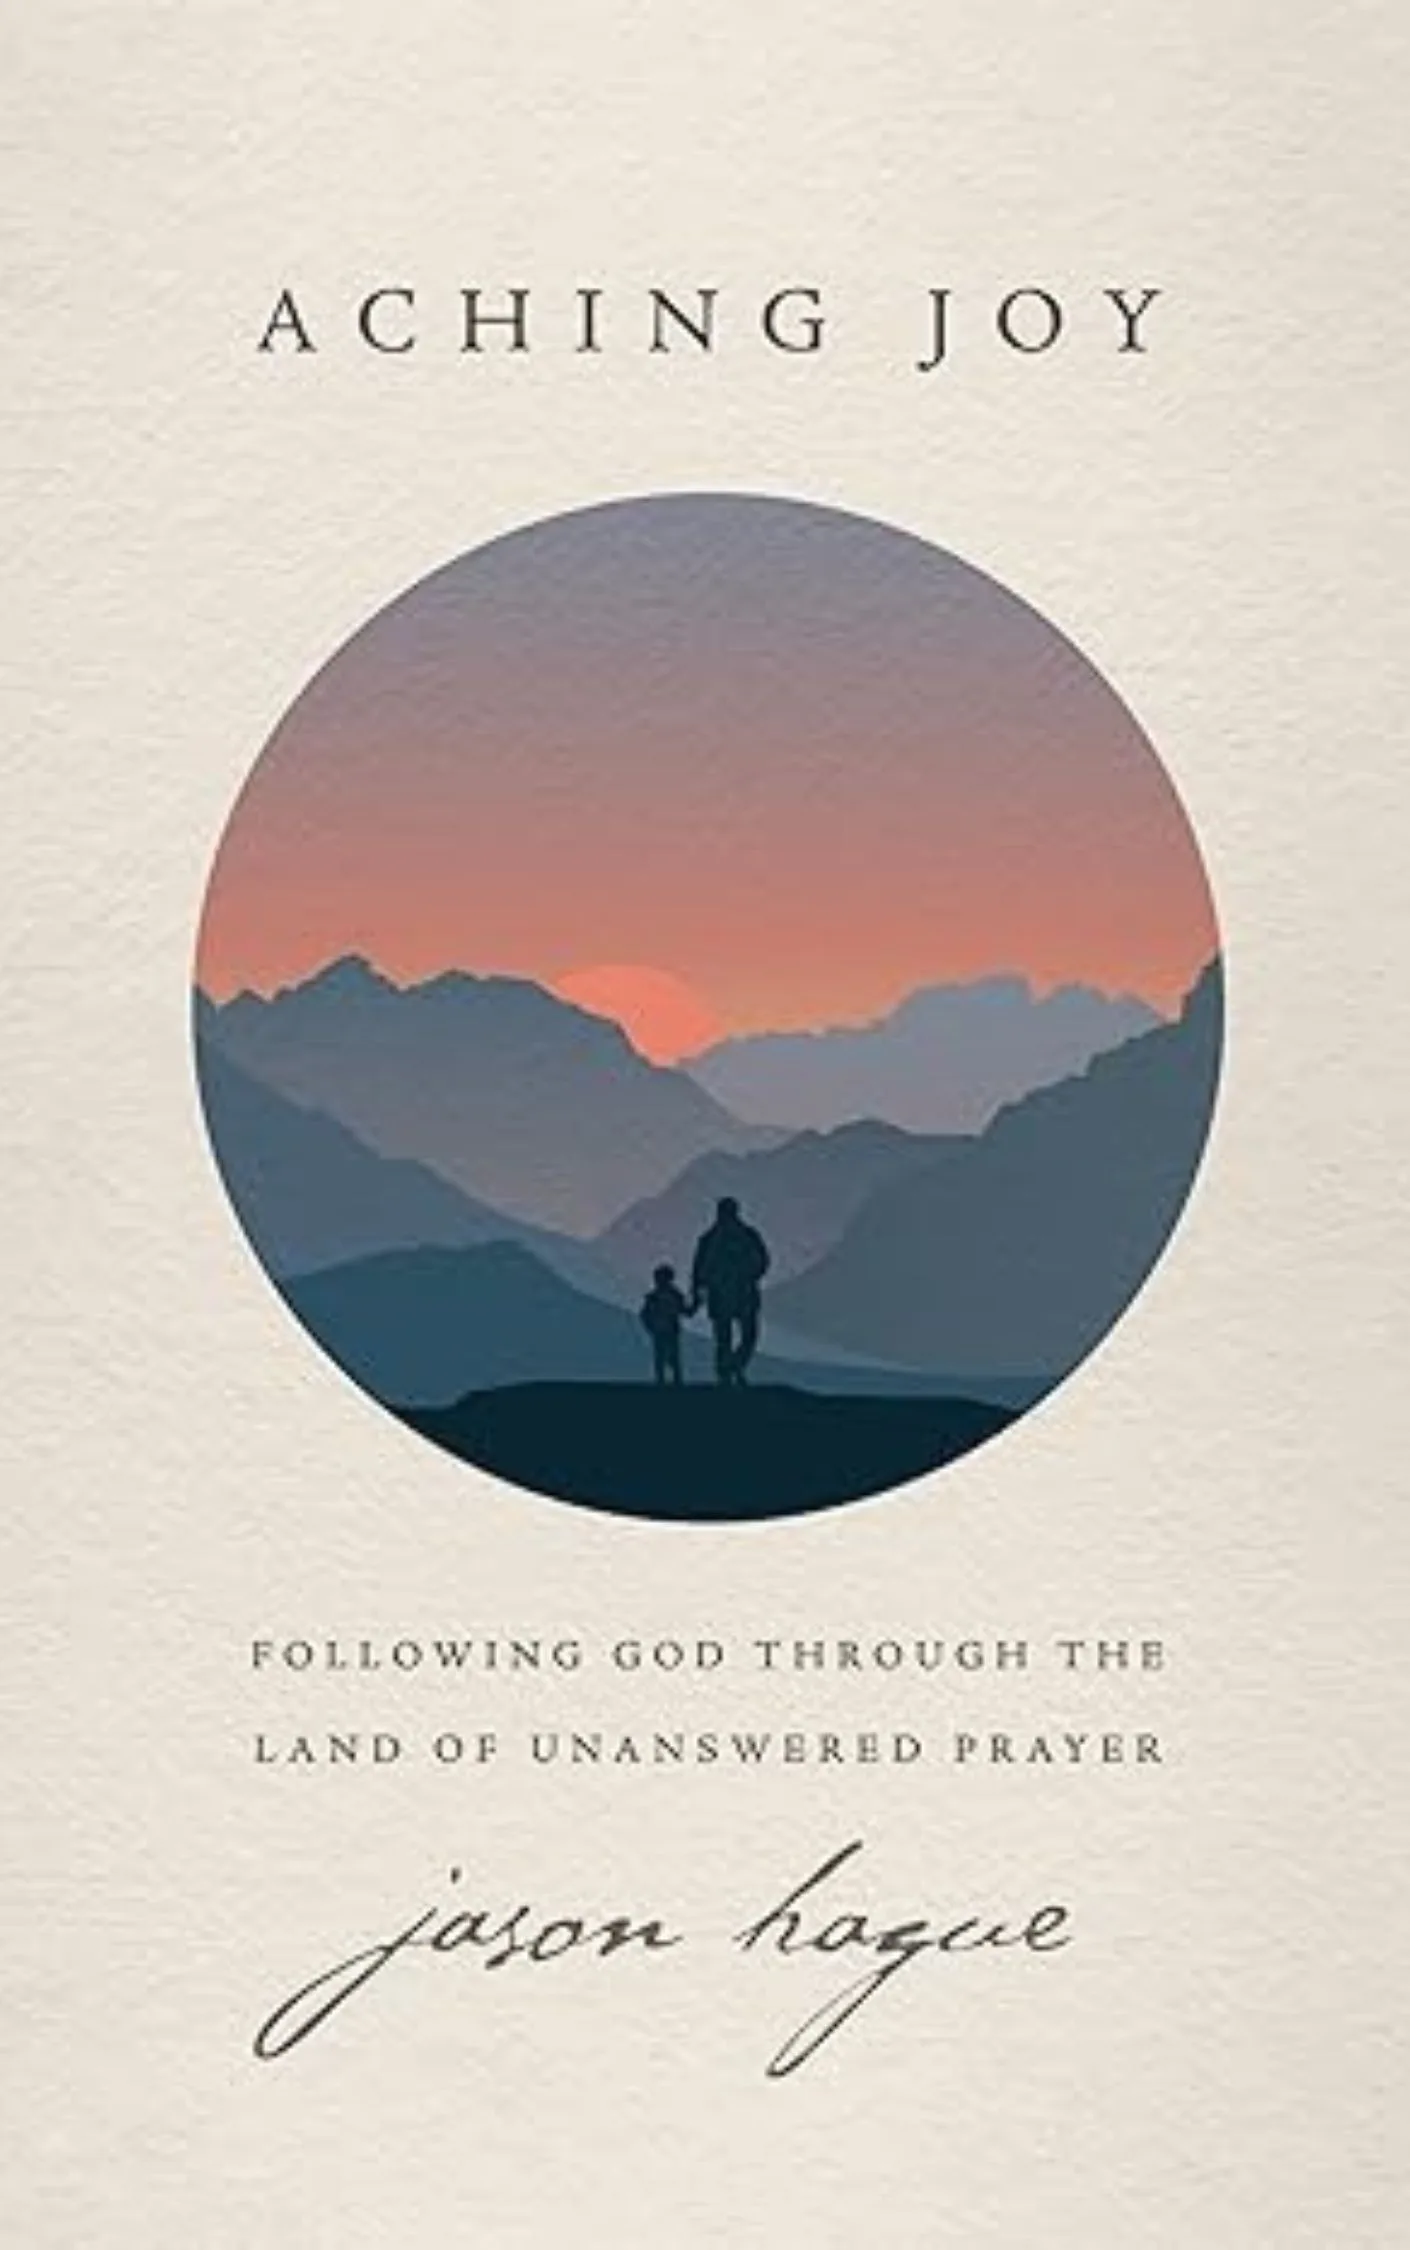 Aching Joy: Following God through the Land of Unanswered Prayer by Jason Hague